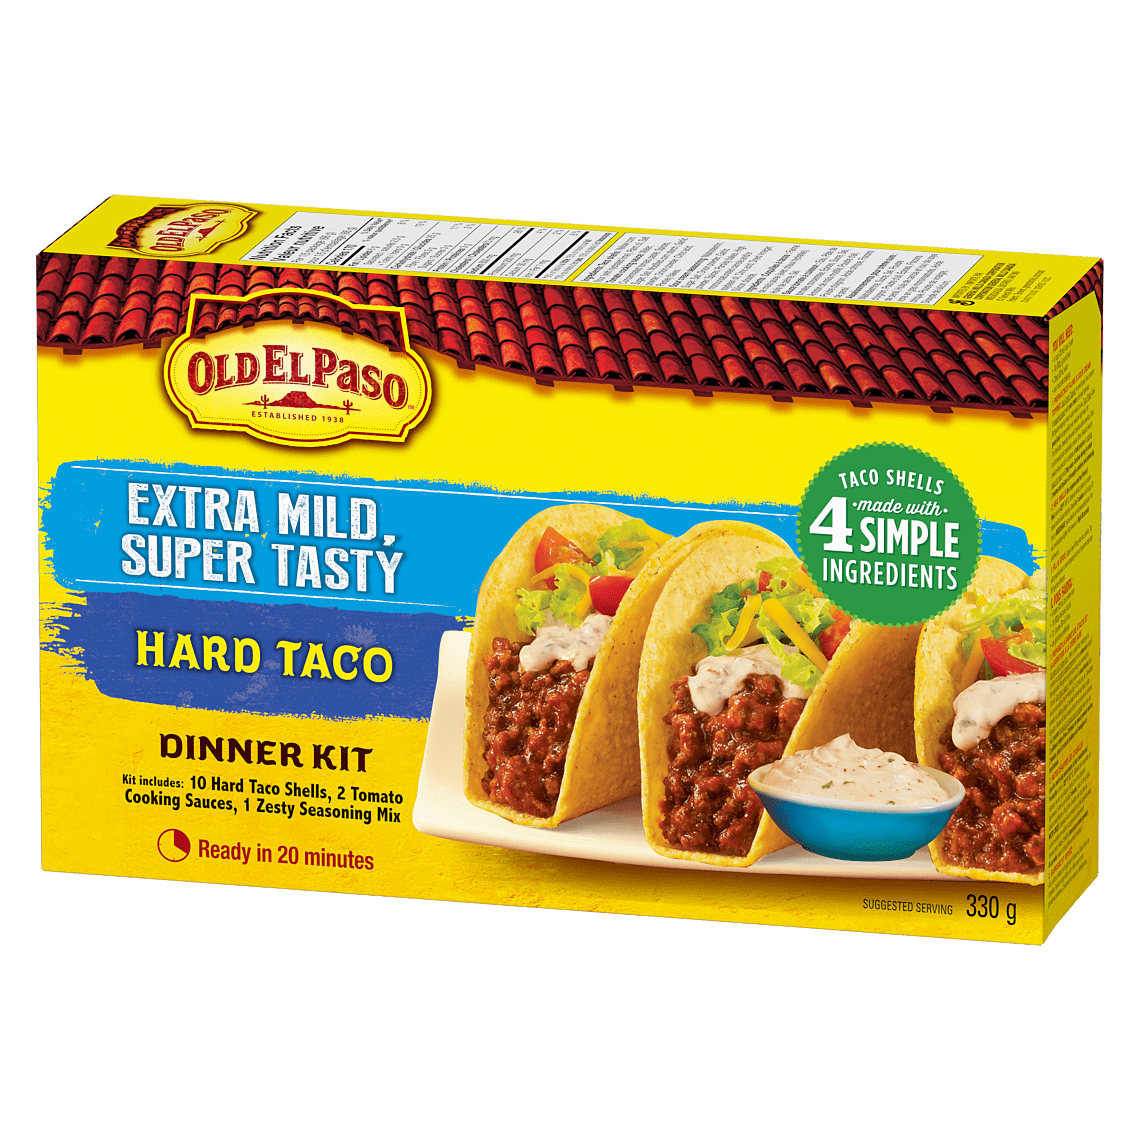 Extra Mild, Super Tasty Hard Taco Dinner Kit